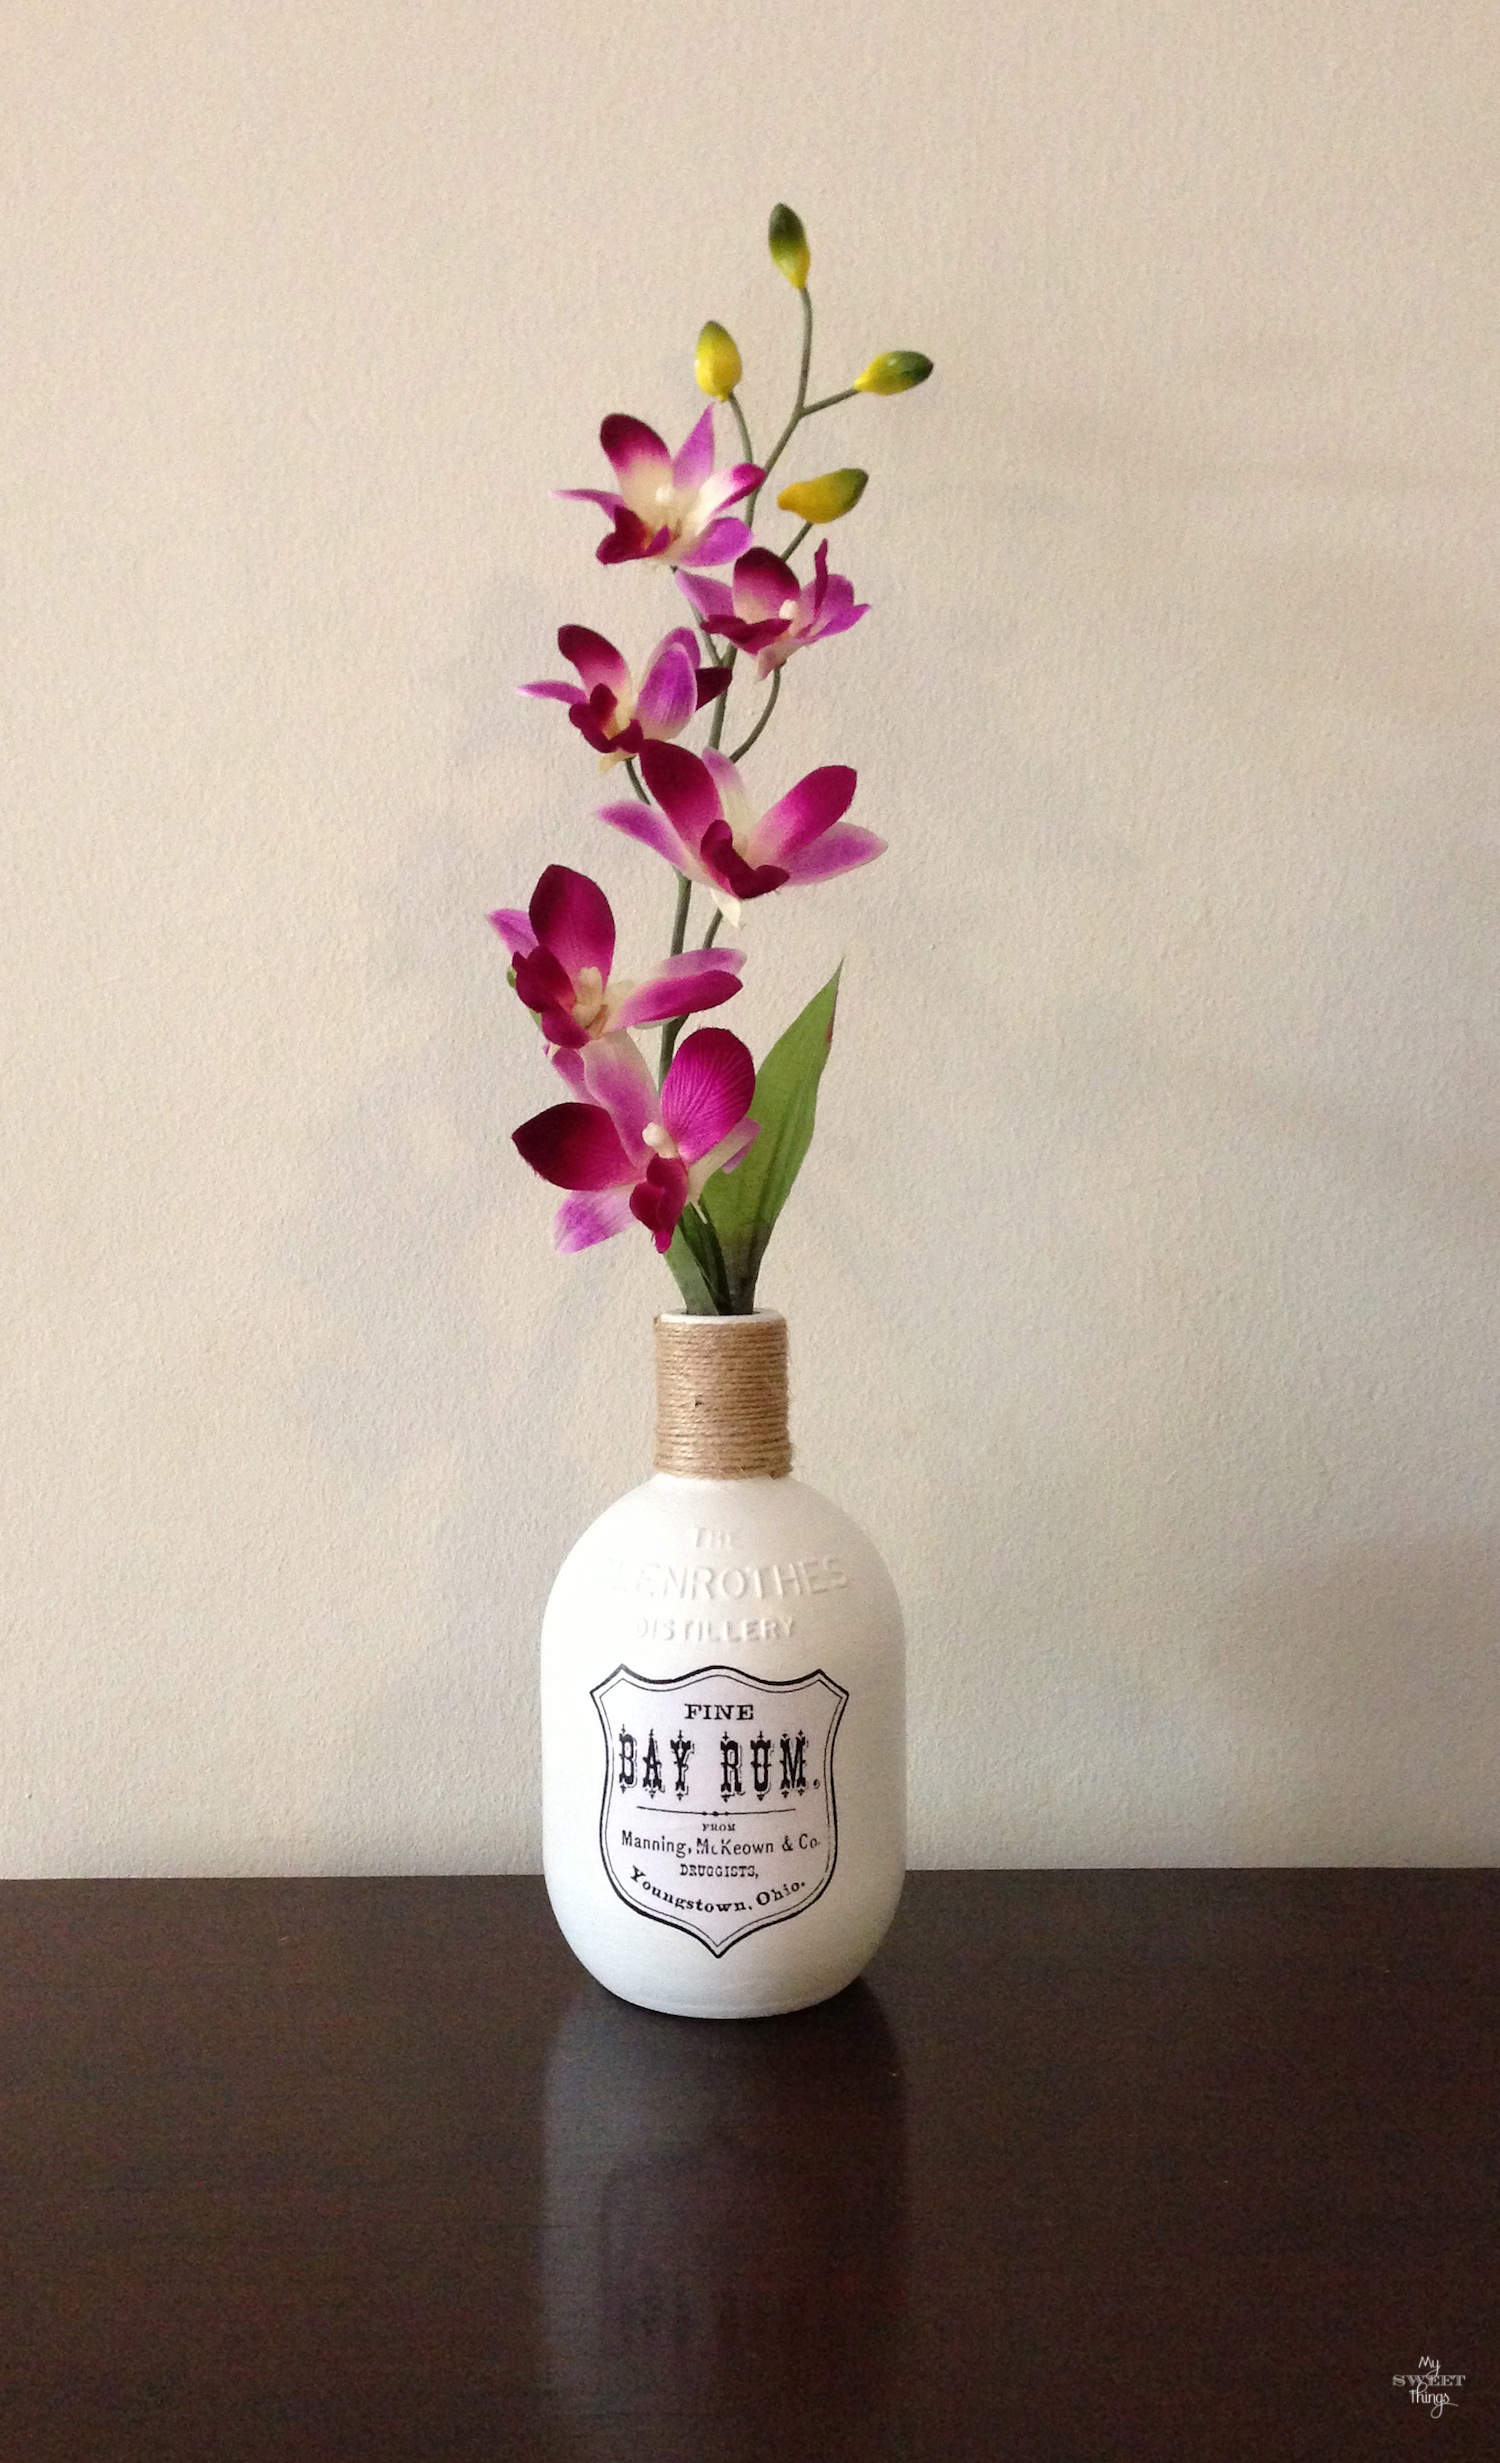 Empty bottled upcycled into a flower vase - Jarrón %22Bay Rum%22